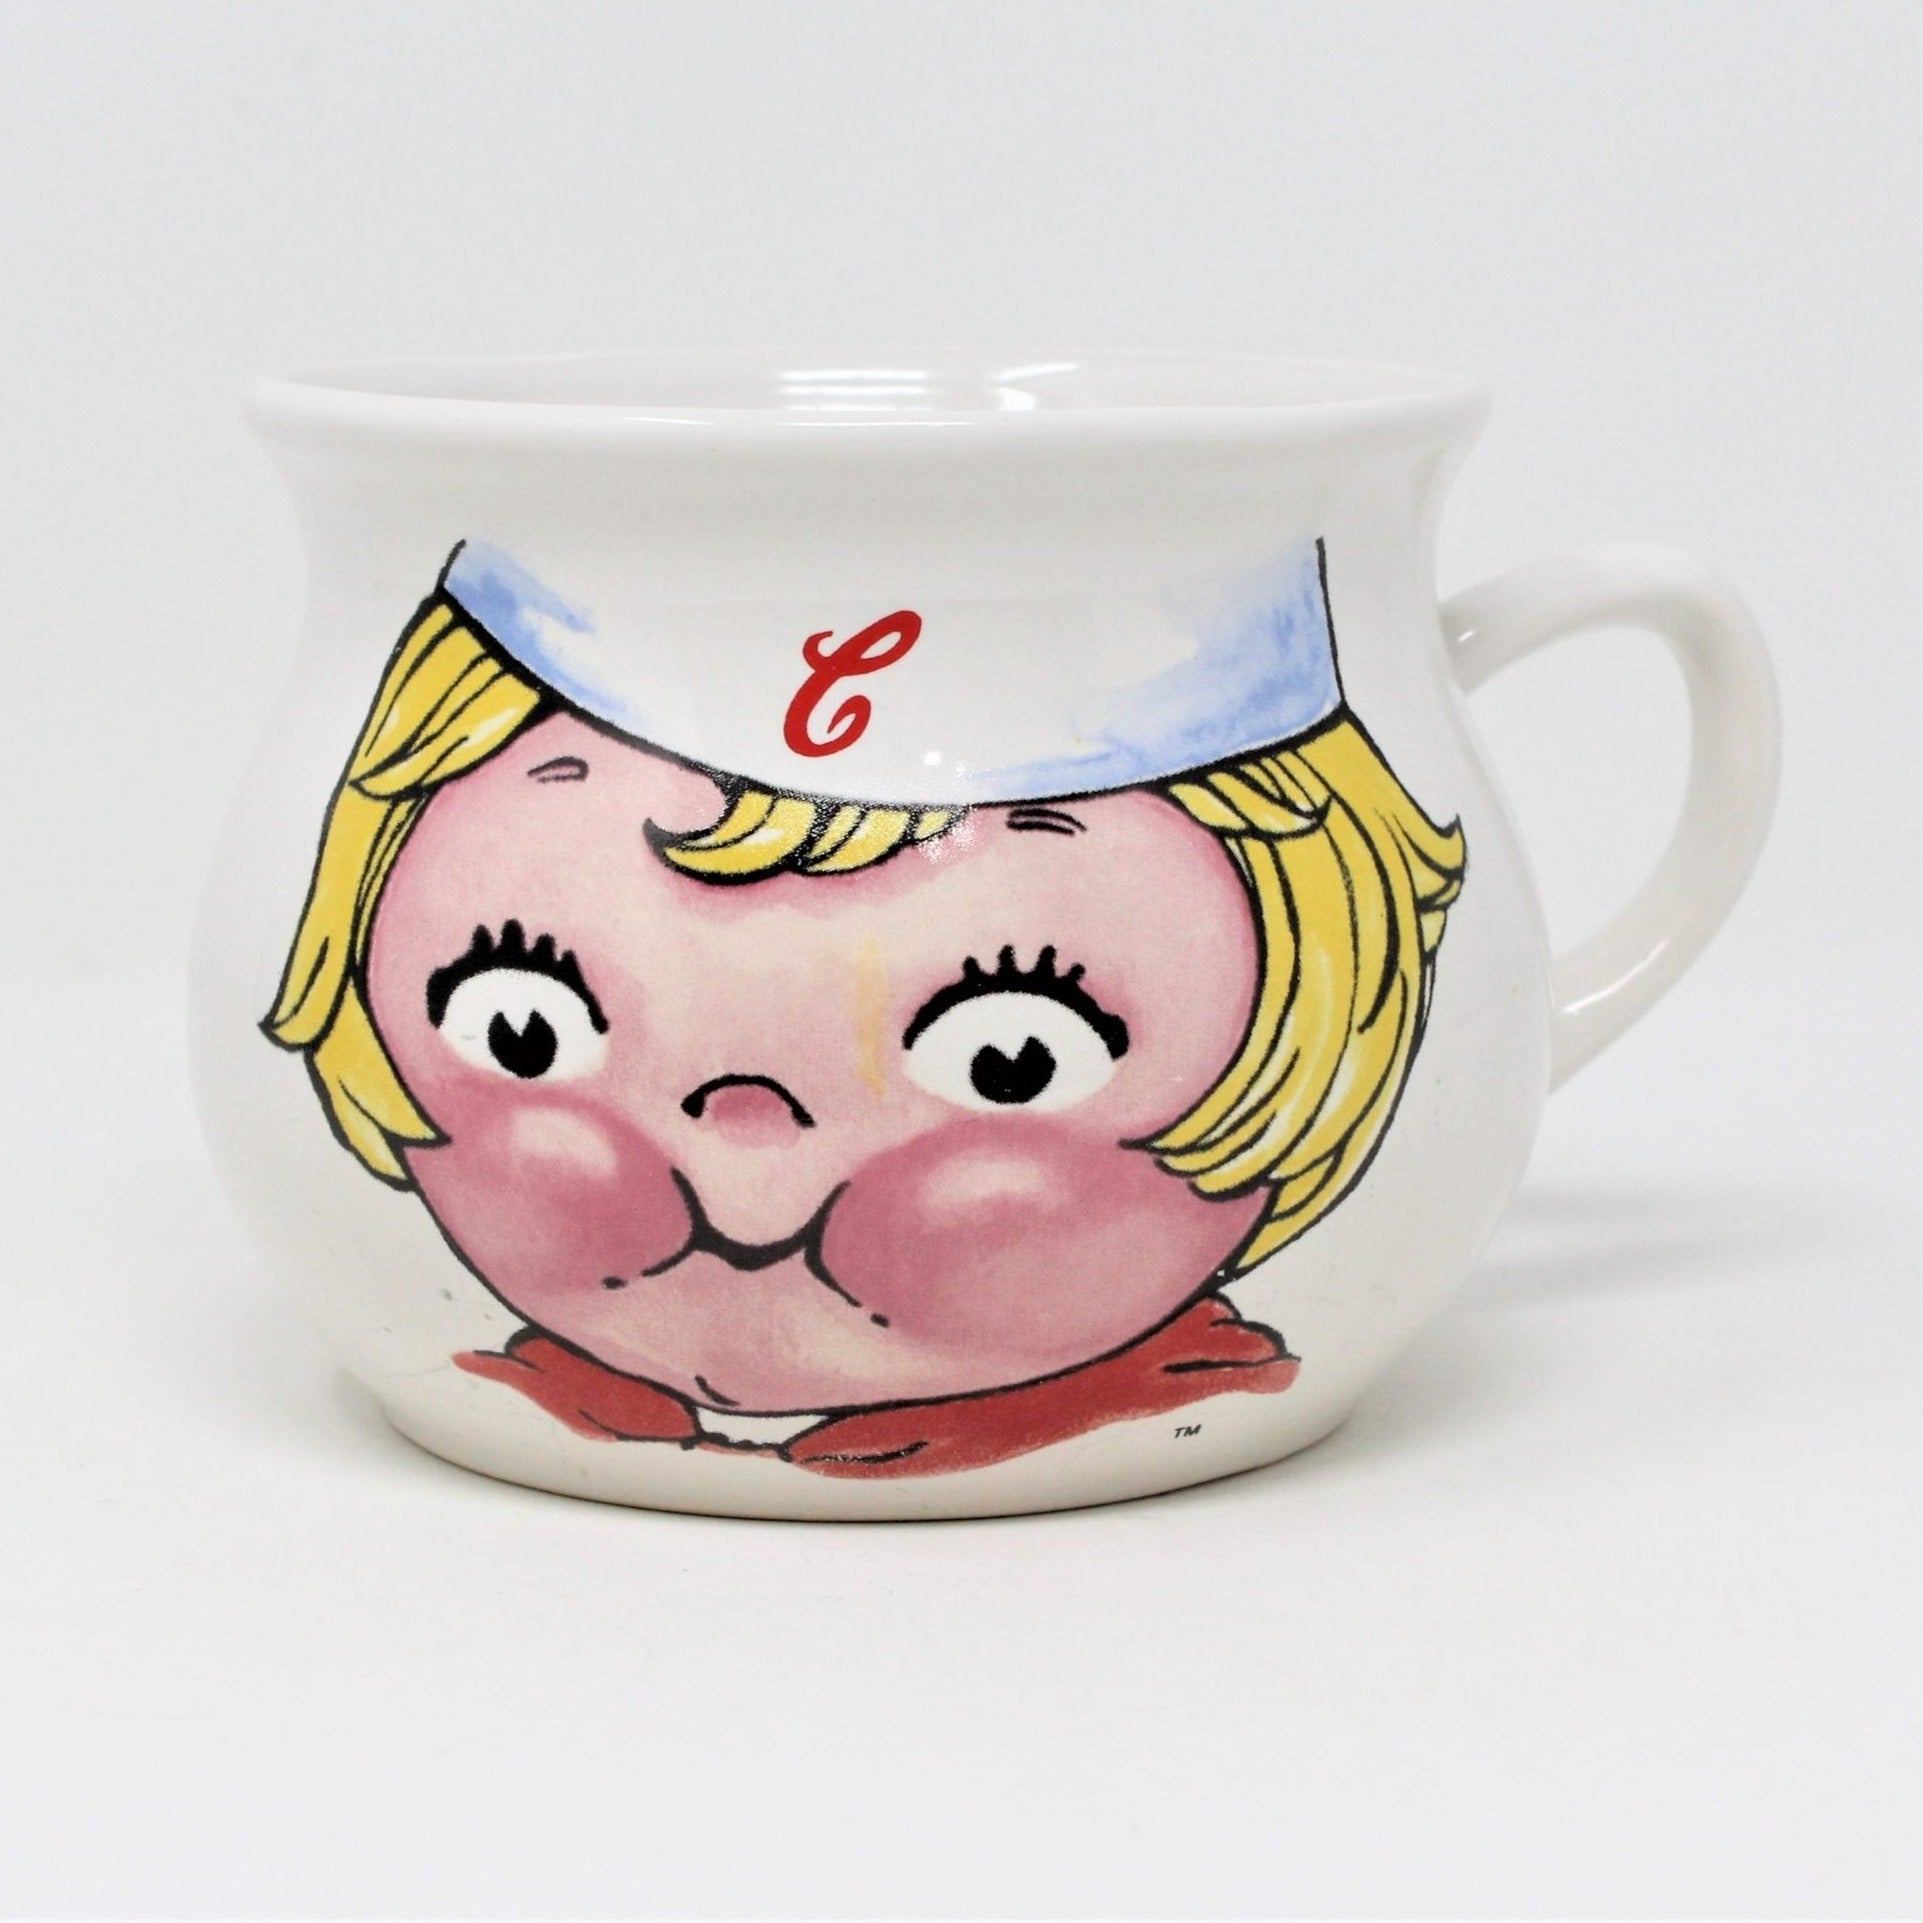 Soup Mug, Campbell's Kids, Large Face, HH Ceramic, 1998 – Antigo Trunk